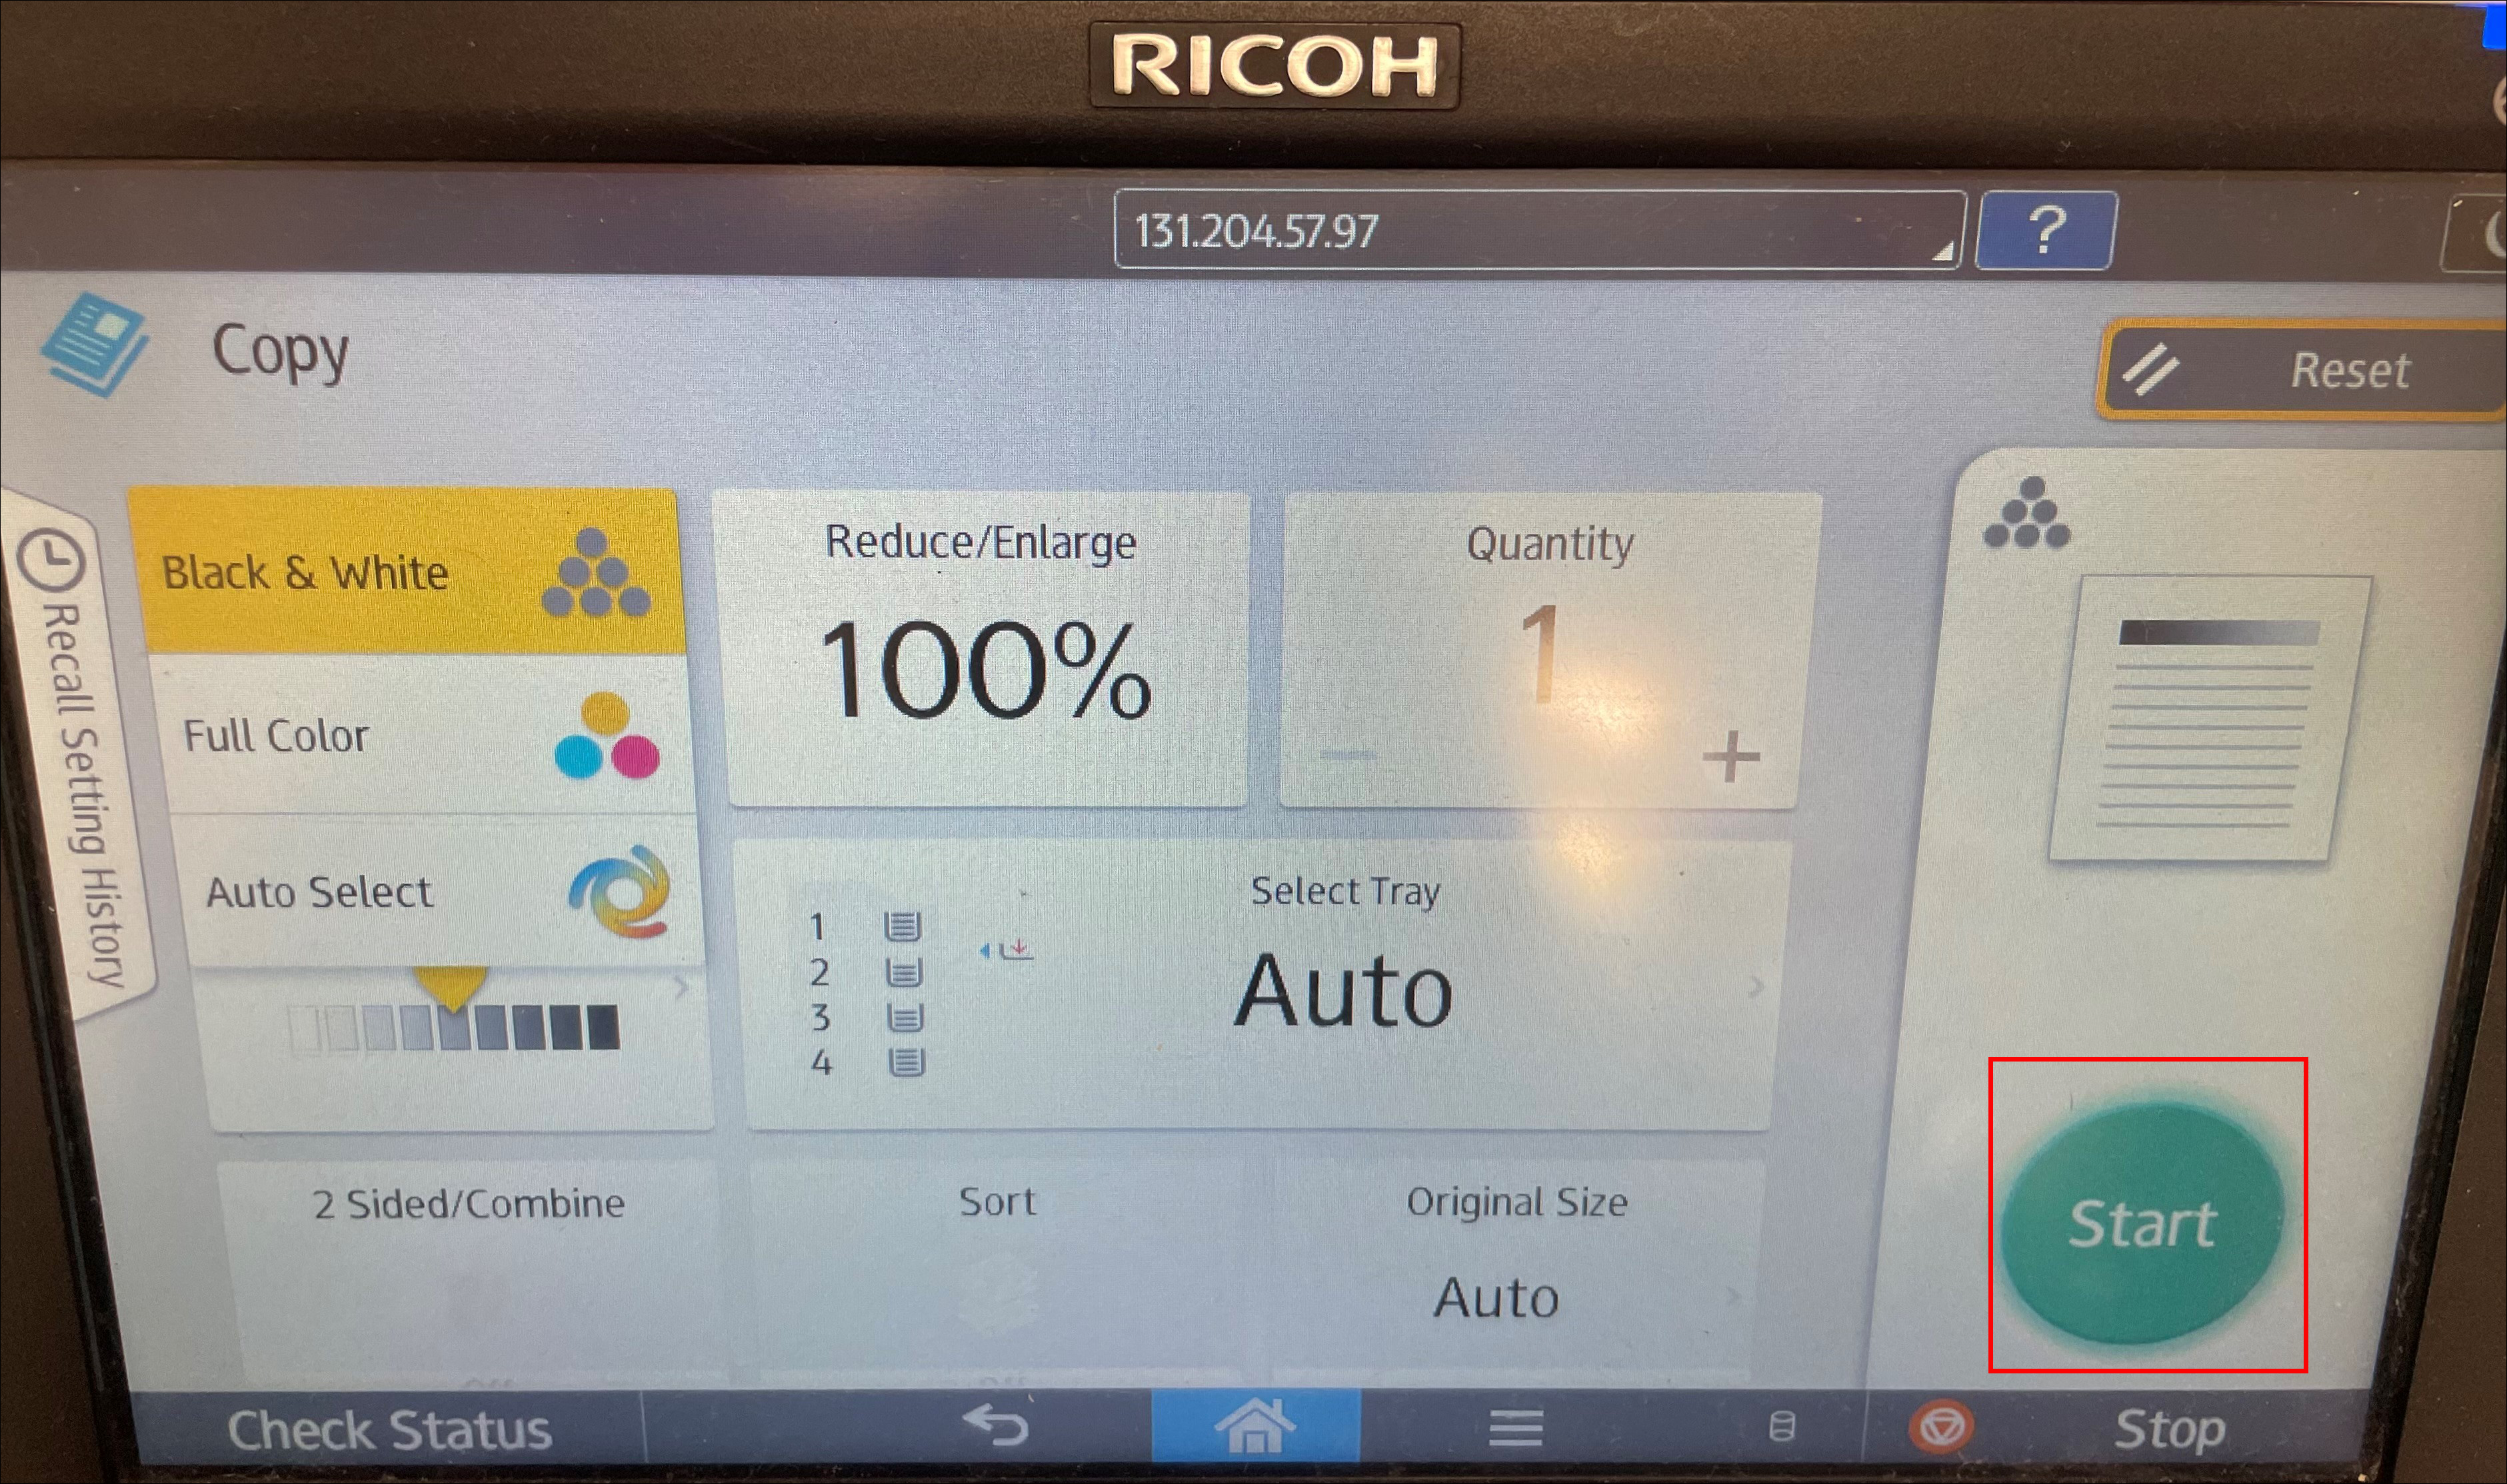 Ricoh copying options screen